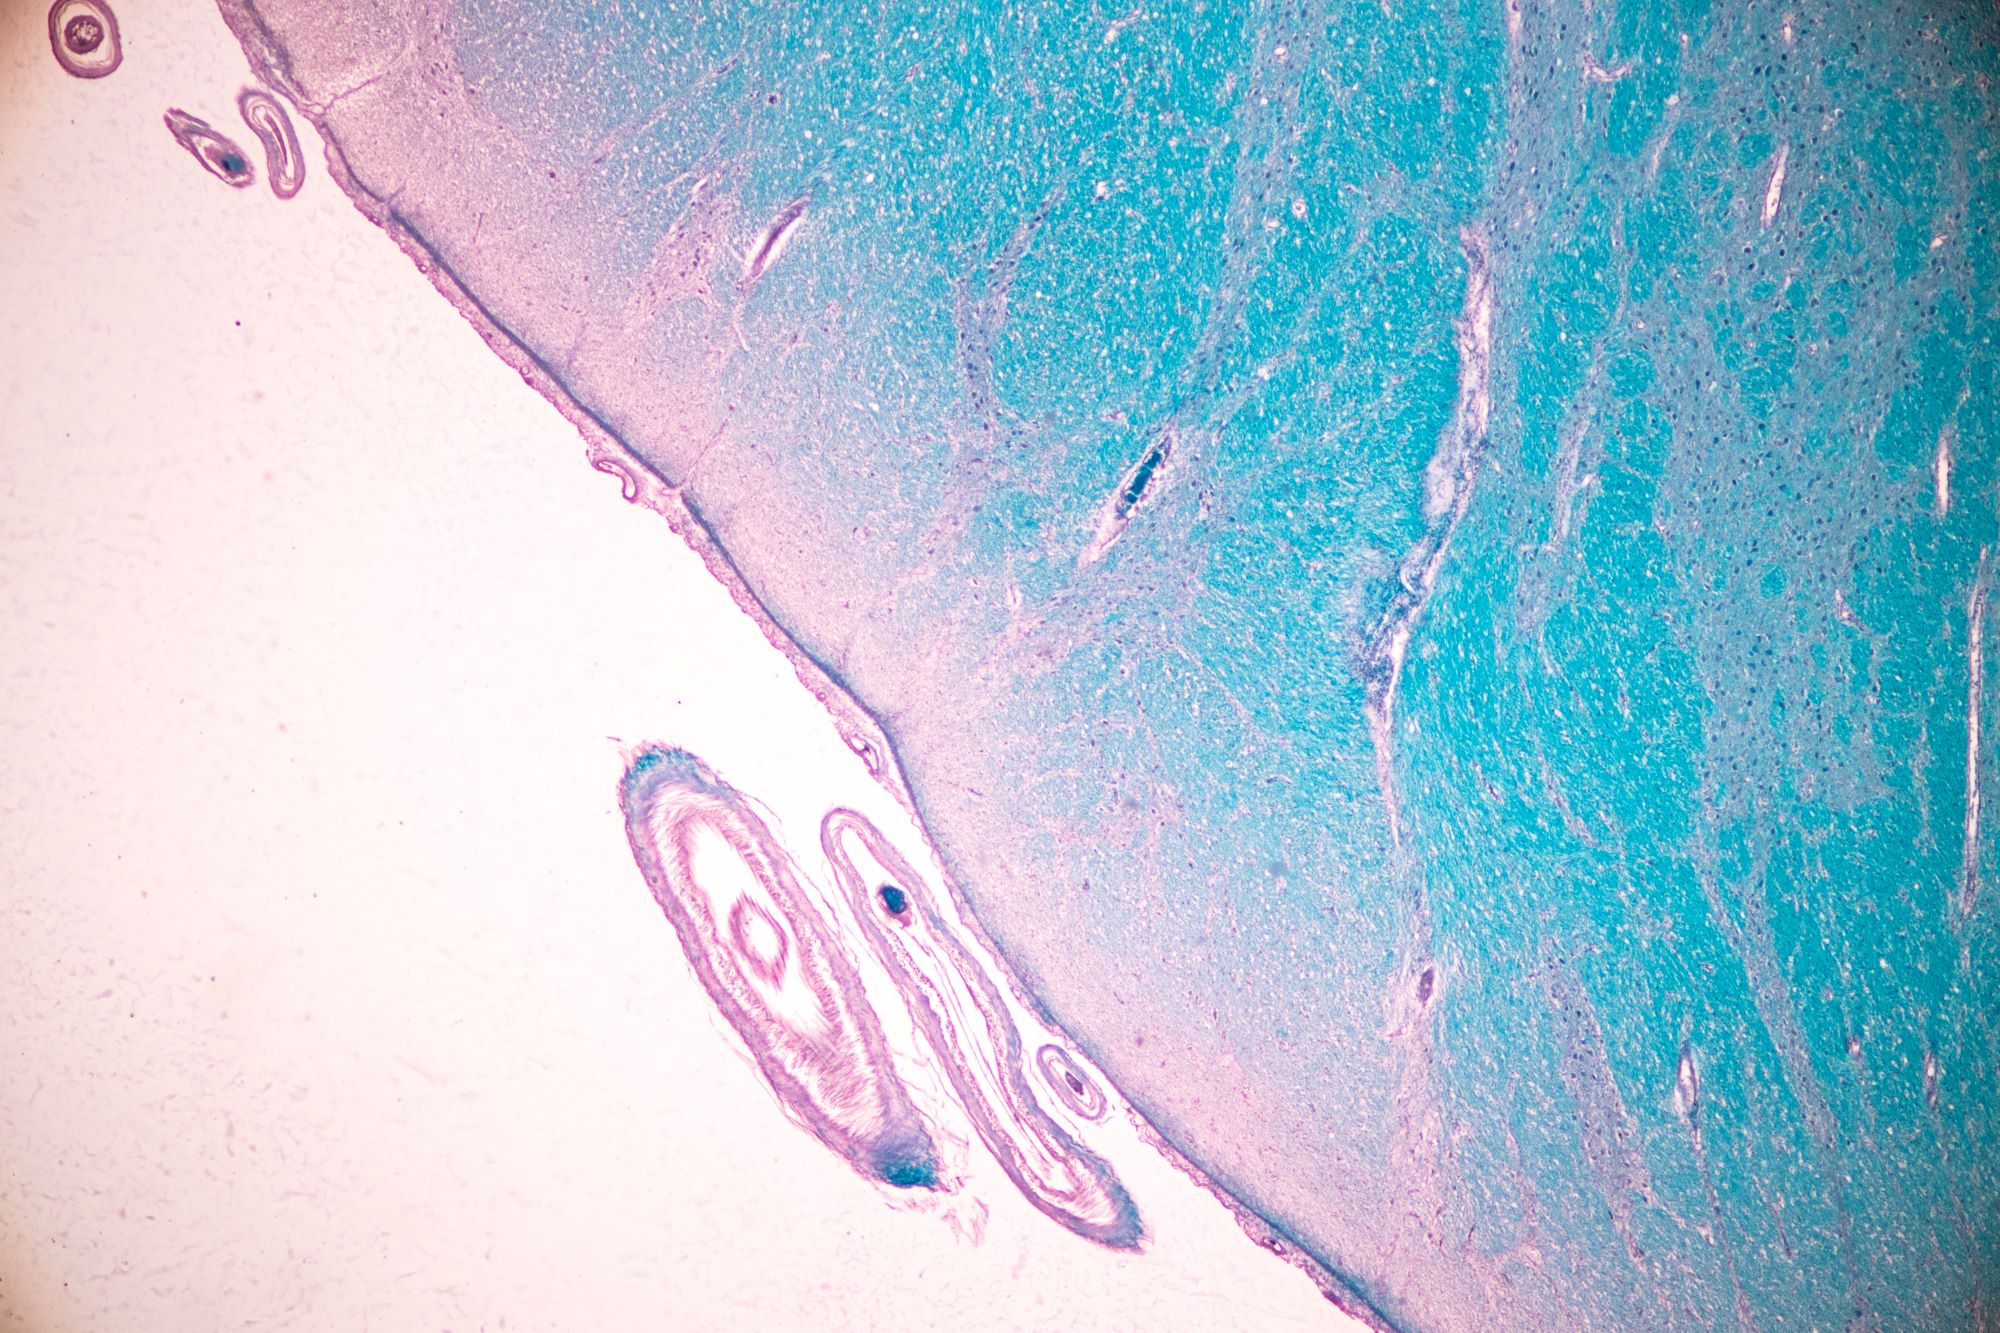 Microscope image of brain tissue